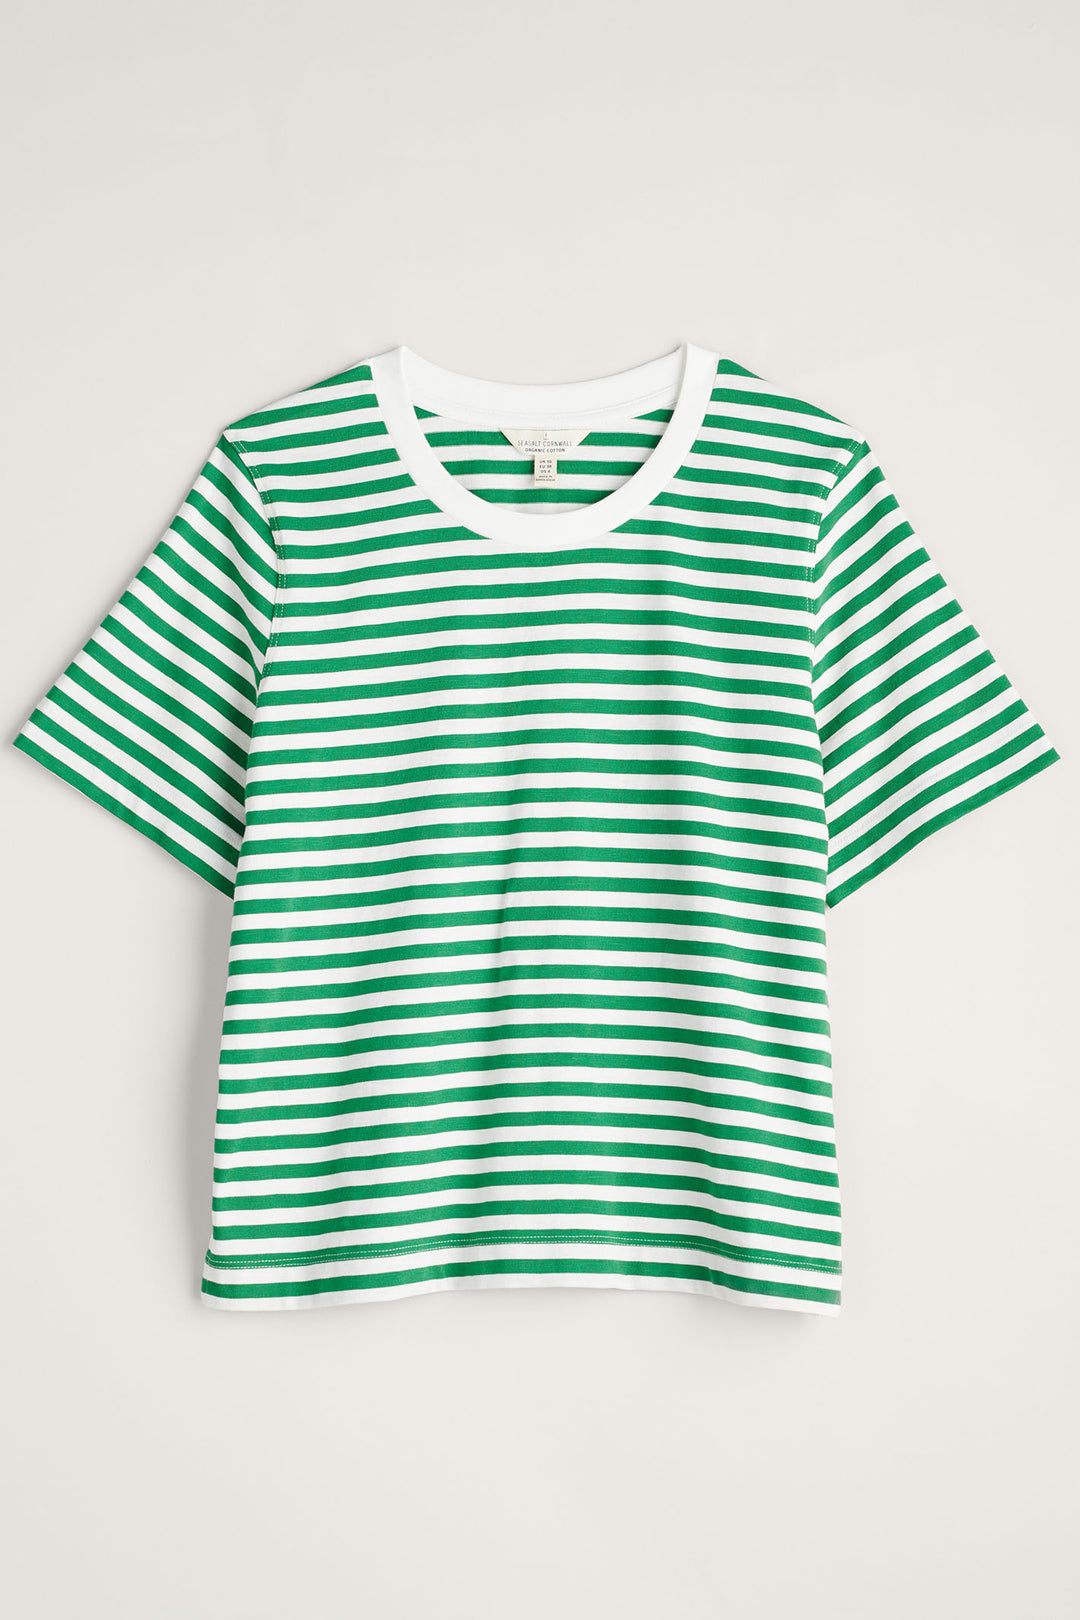 Seasalt Copseland Green Mini Cornish Island Chalk Striped T-Shirt - Shirley Allum Boutique